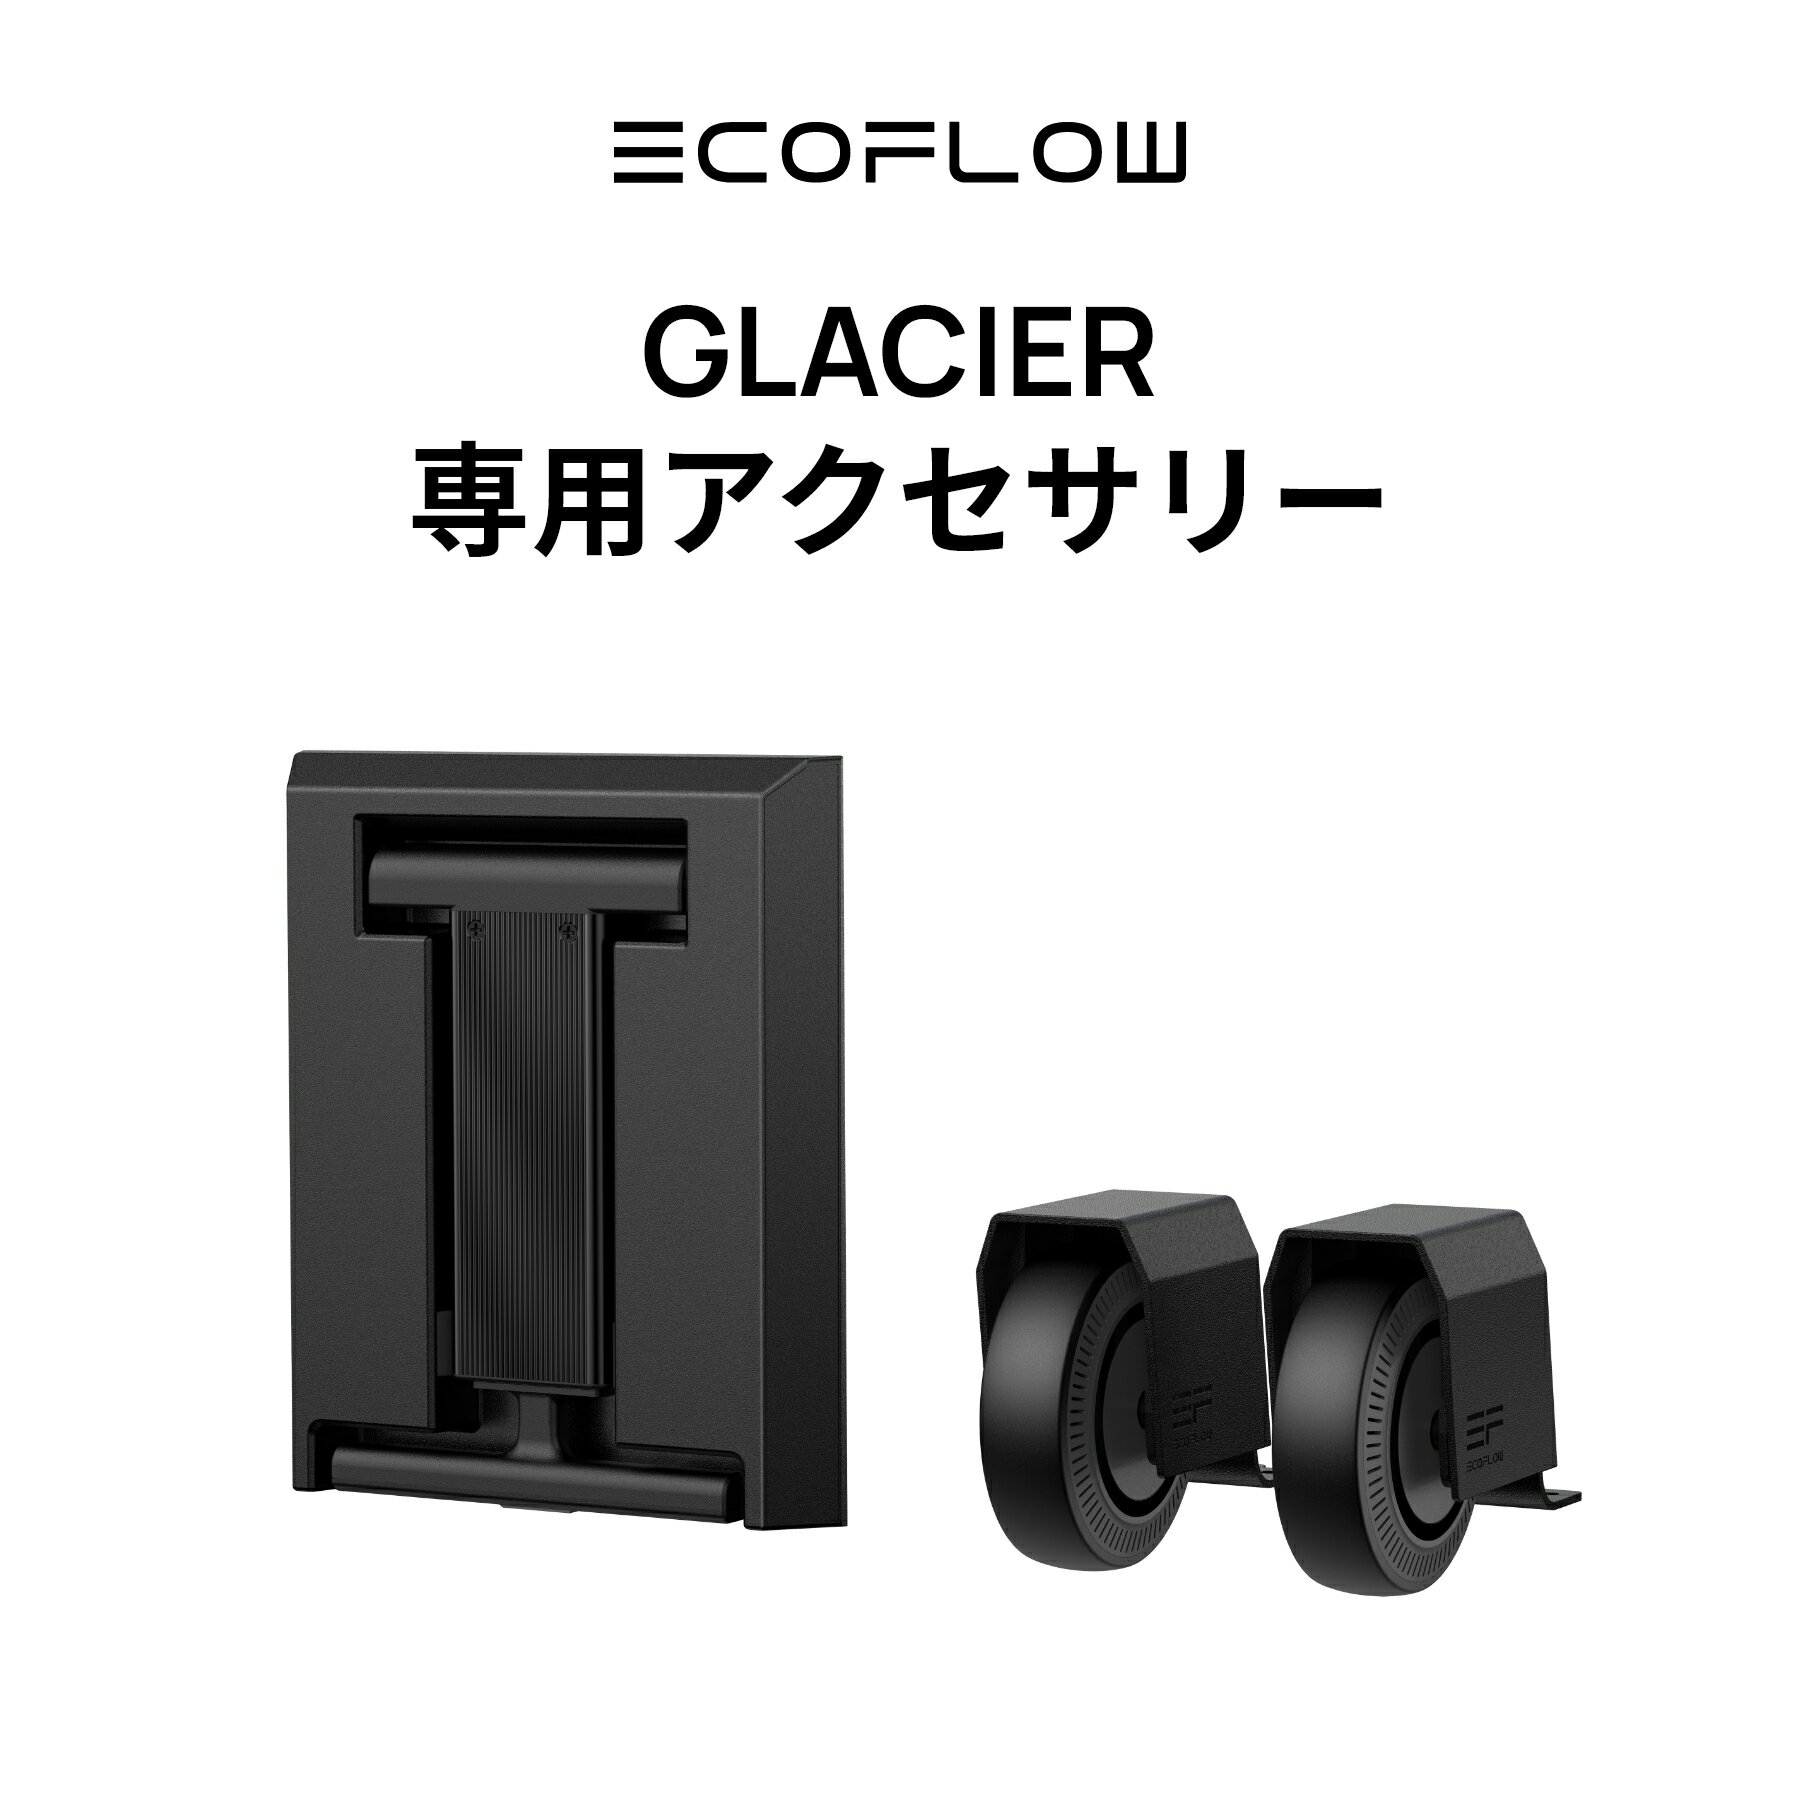 EcoFlow GLACIER ポータブル冷蔵庫 専用アクセサリー ハンドル キャスター 着脱式持ち手 伸縮ハンドル